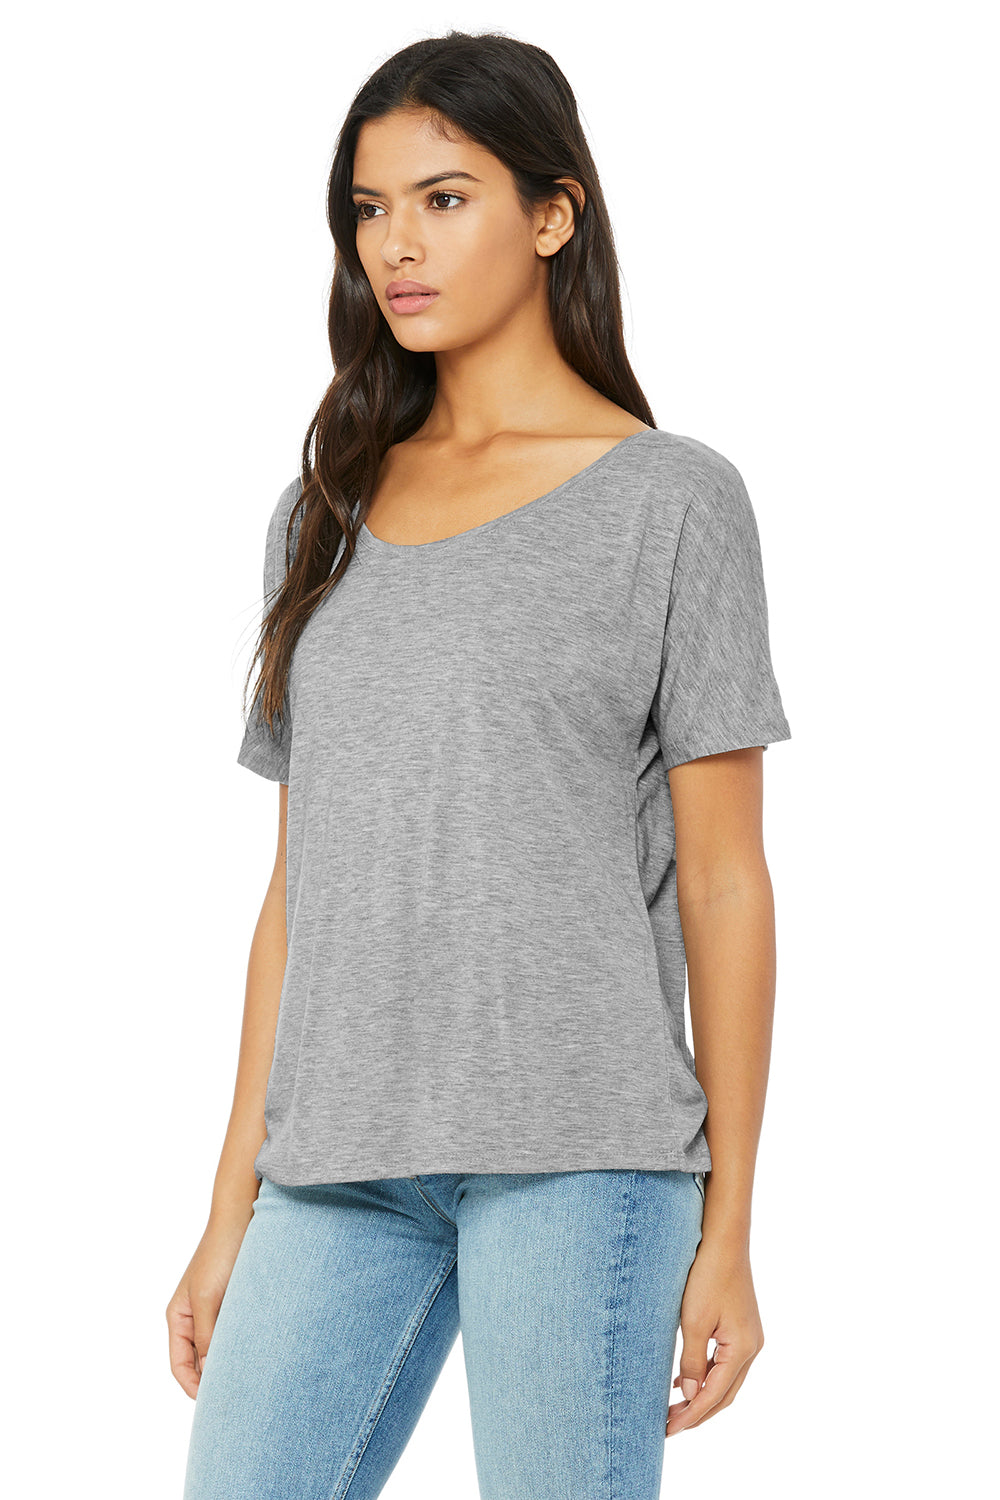 Bella + Canvas BC8816/8816 Womens Slouchy Short Sleeve Wide Neck T-Shirt Heather Grey Model 3Q